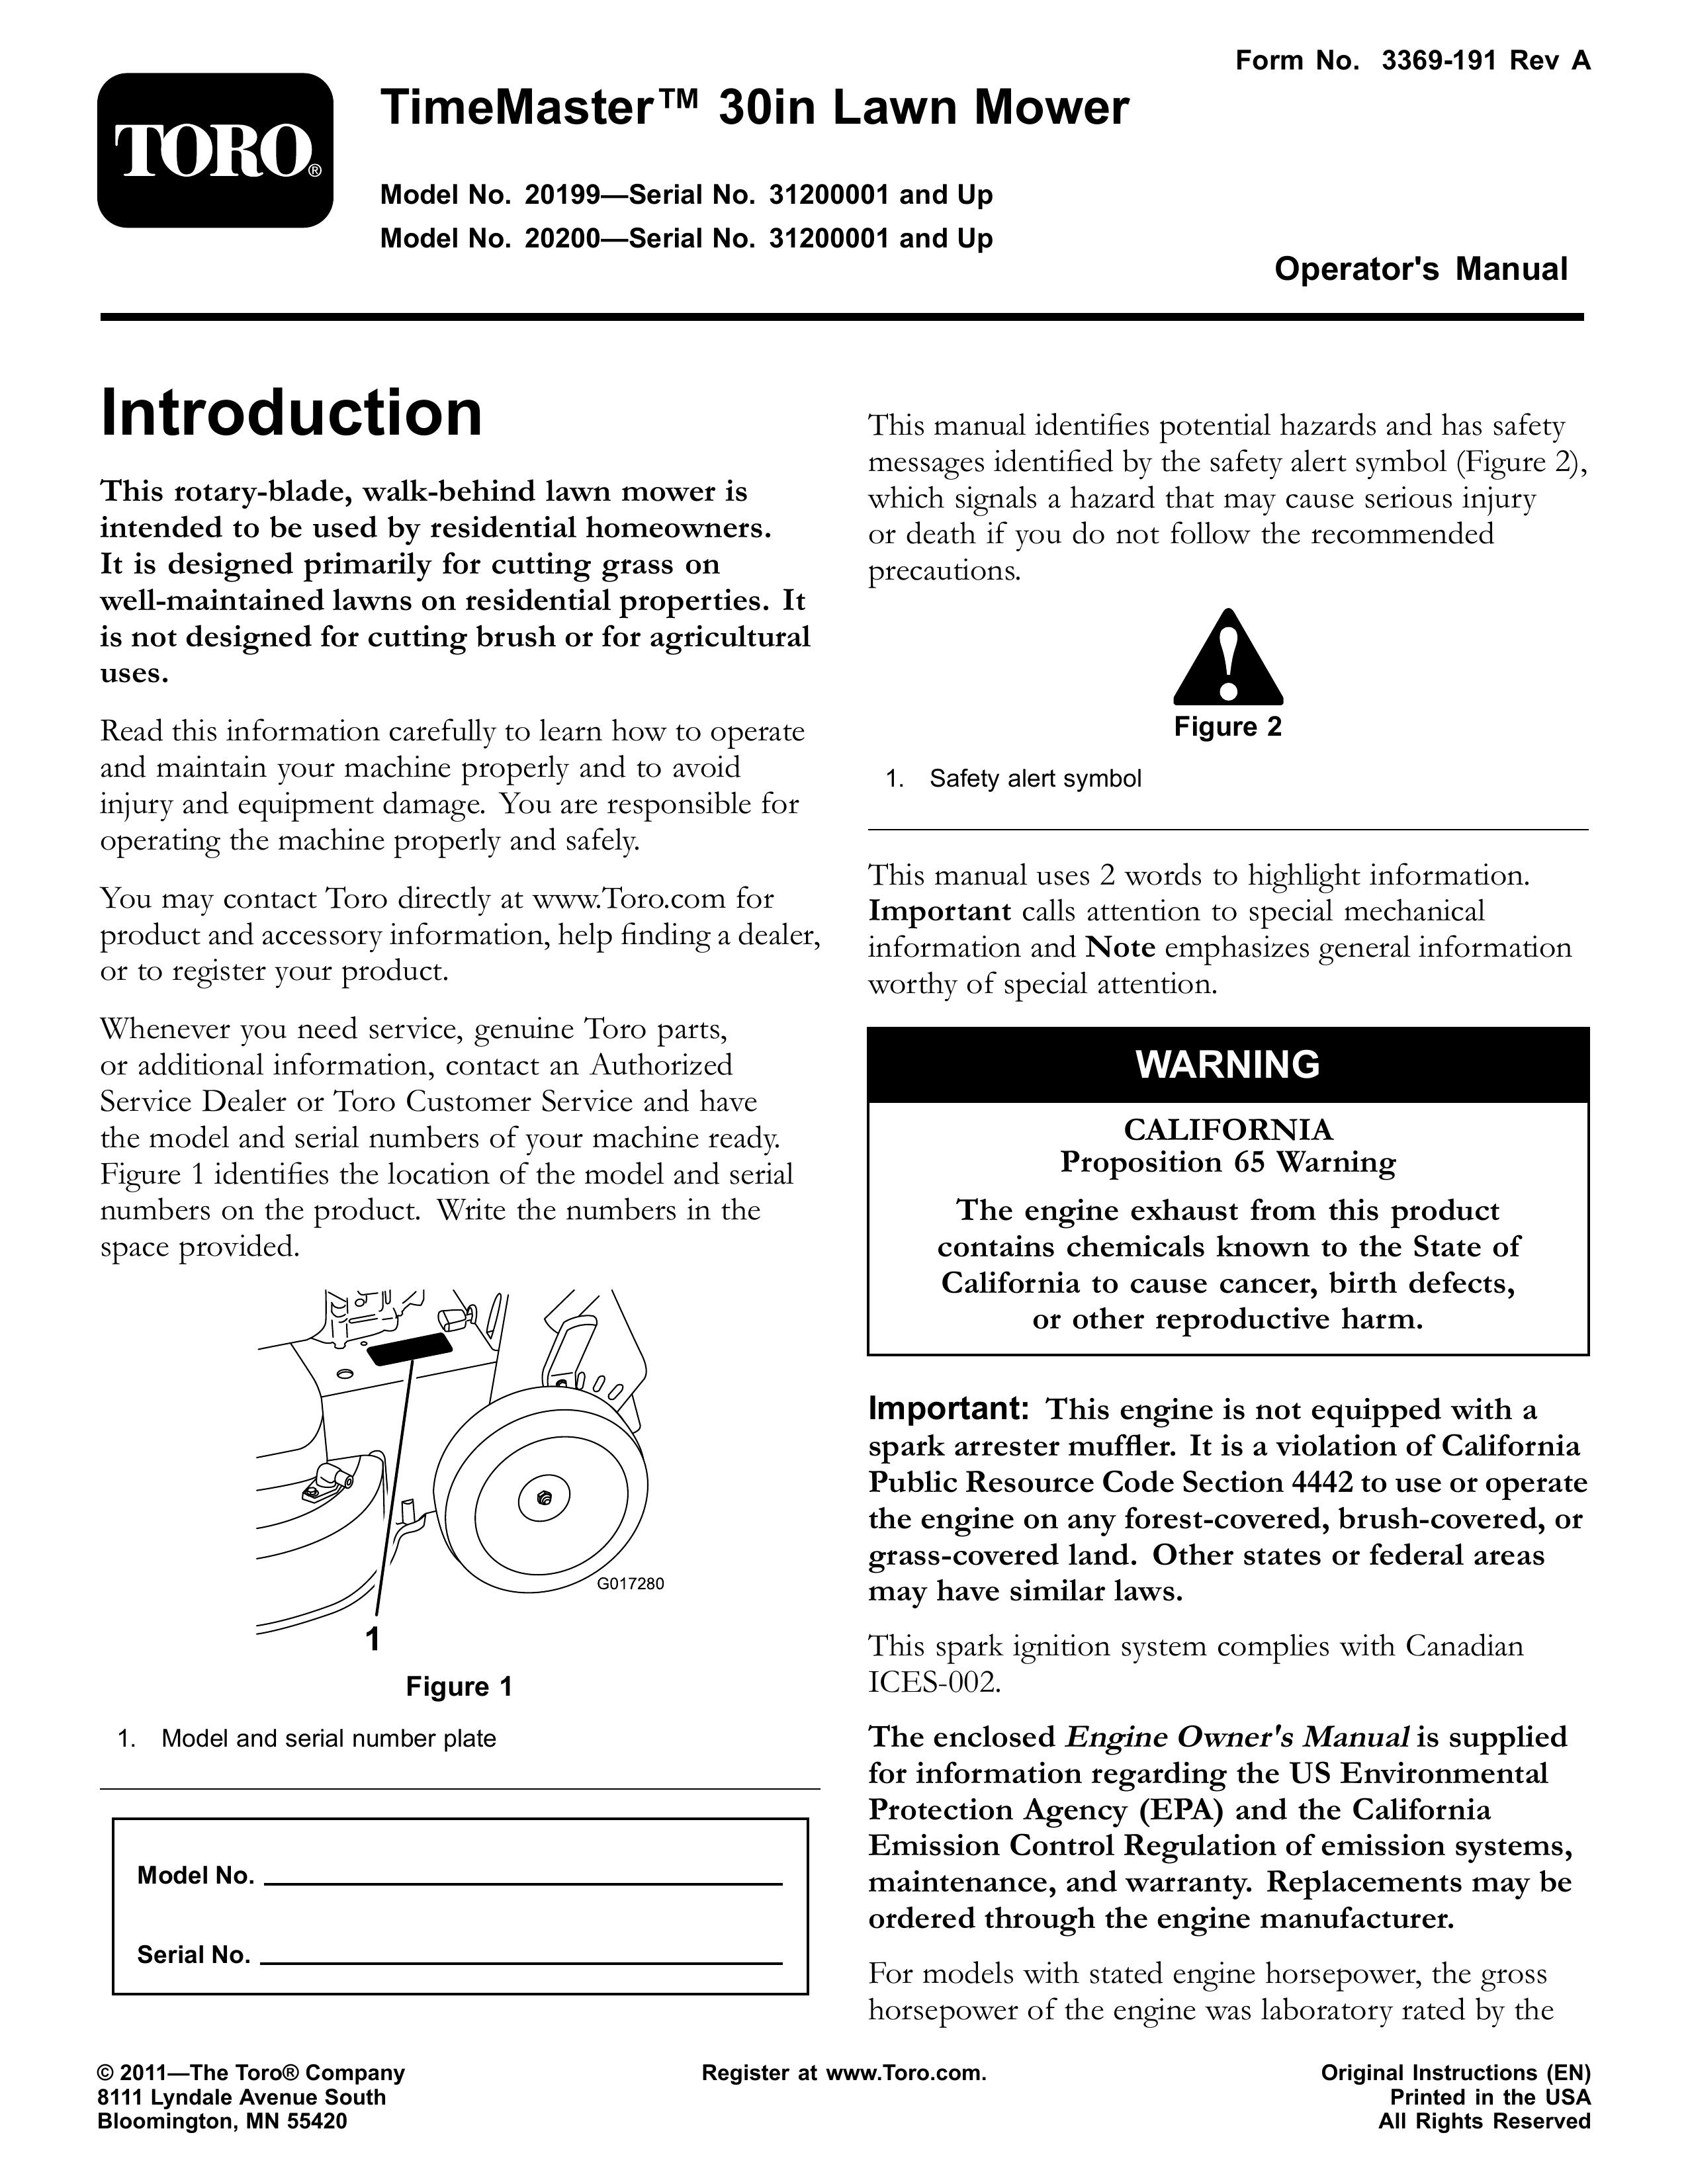 Toro 20200 Lawn Mower User Manual